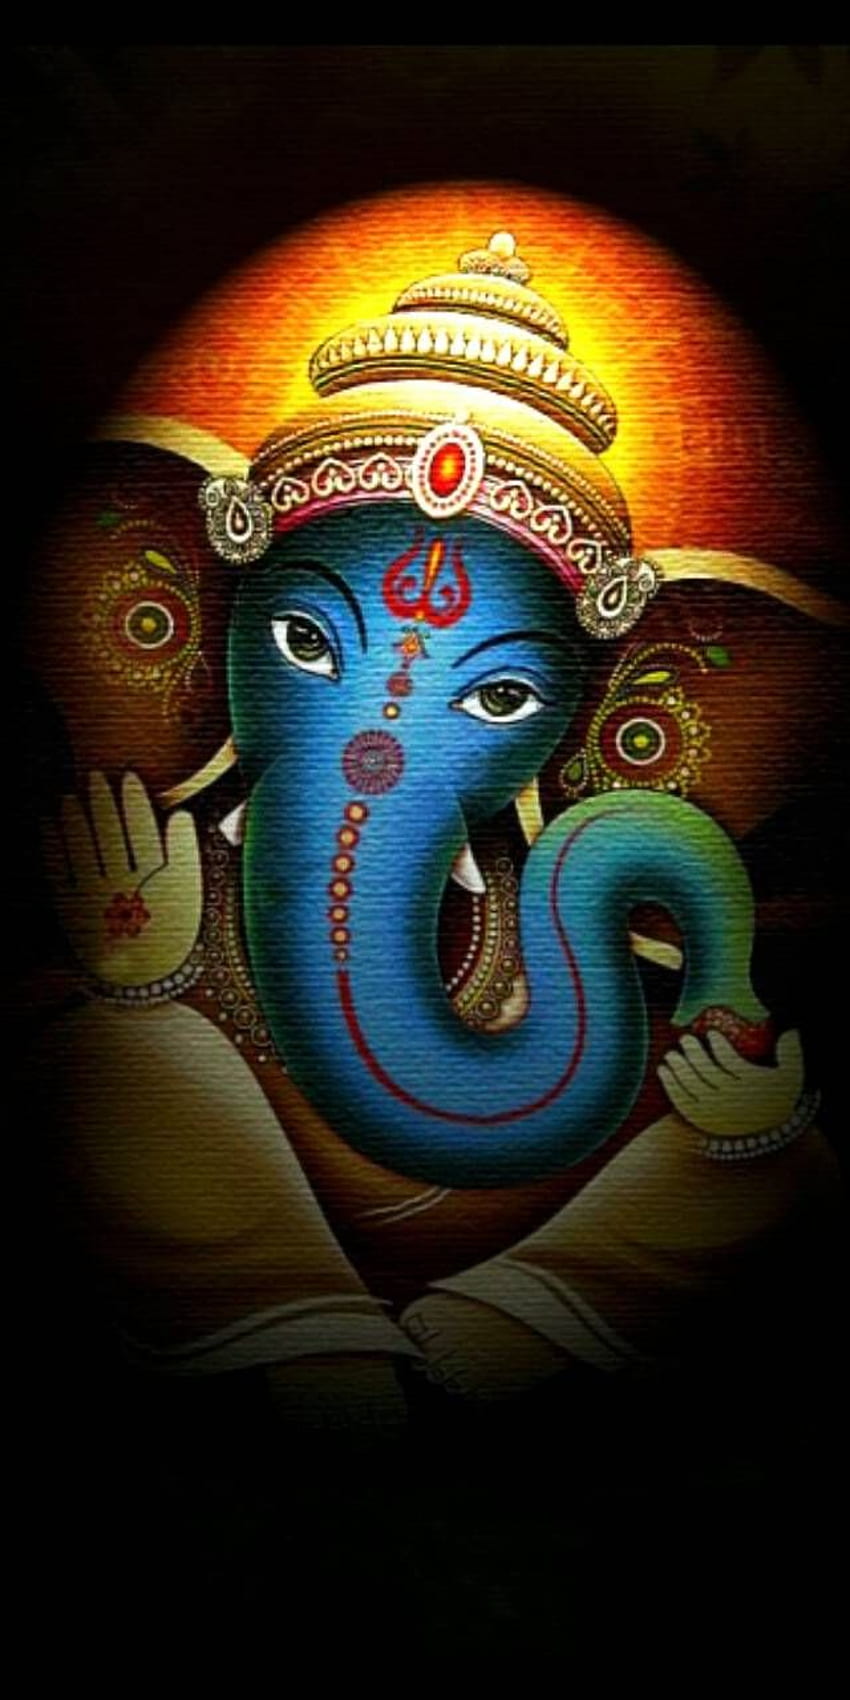 400+] Ganesha Wallpapers | Wallpapers.com